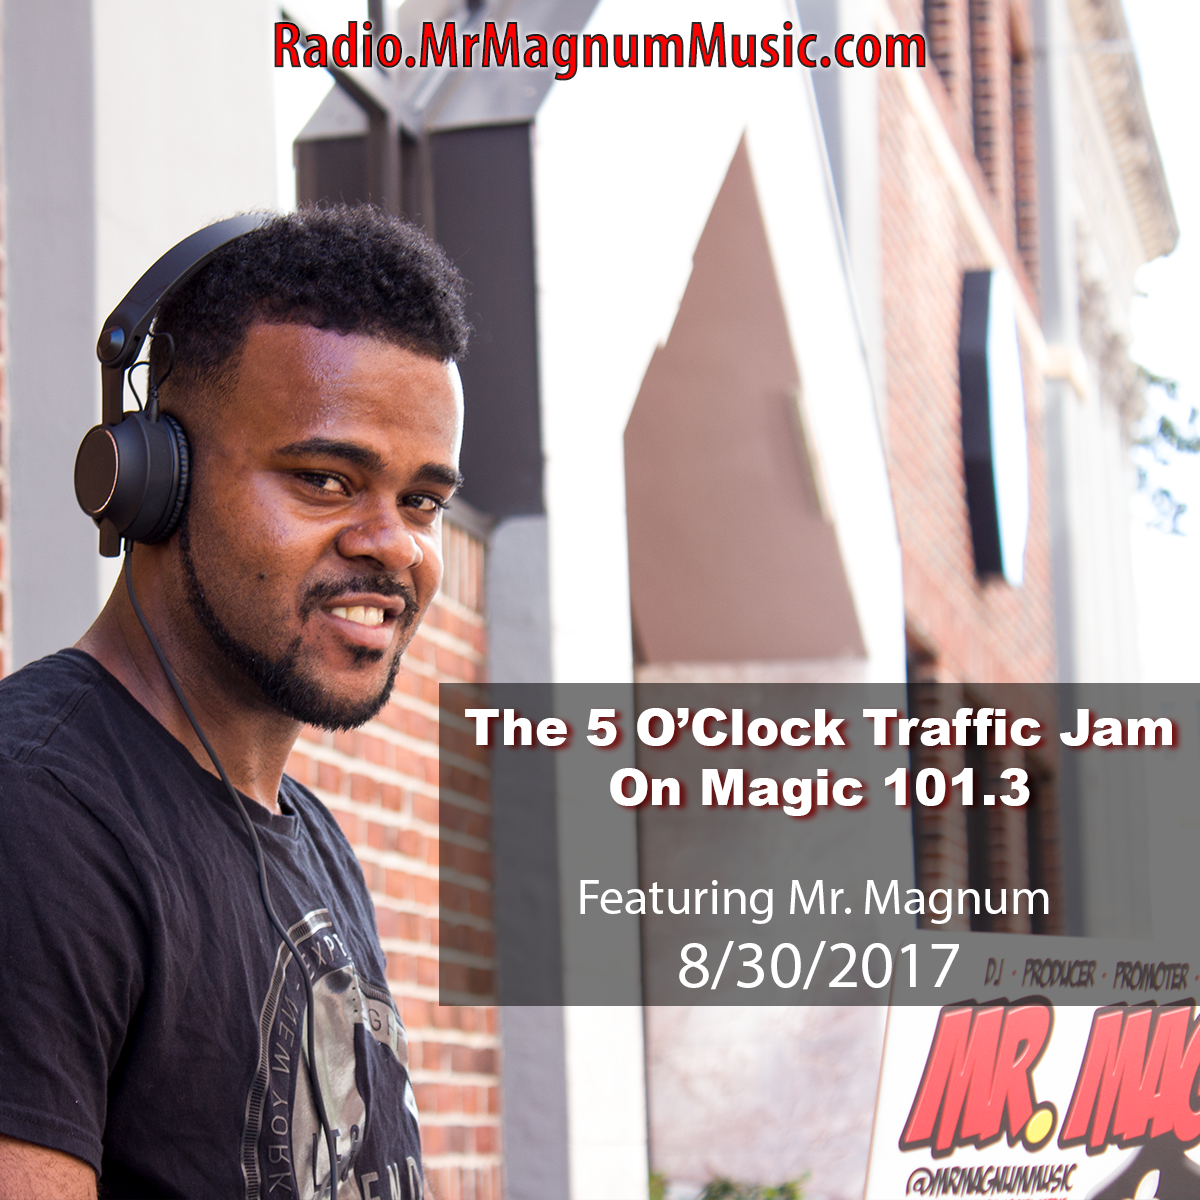 The 5 O'Clock Traffic Jam 20170830 featuring Gainesville's #1 DJ, Mr. Magnum on Magic 101.3